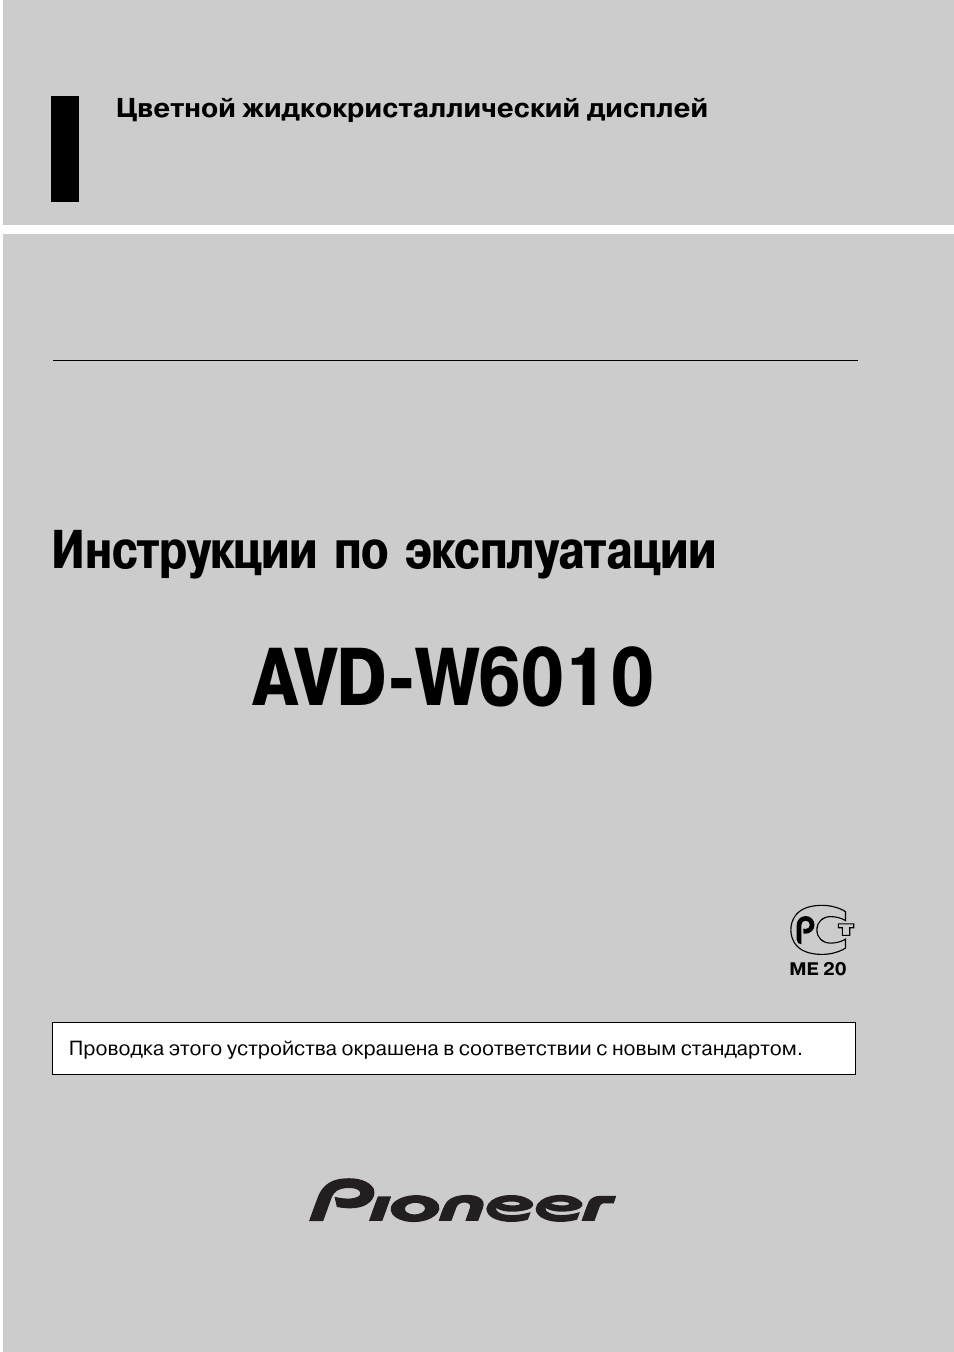 Инструкция по эксплуатации Pioneer AVD-W6010 | 40 страниц